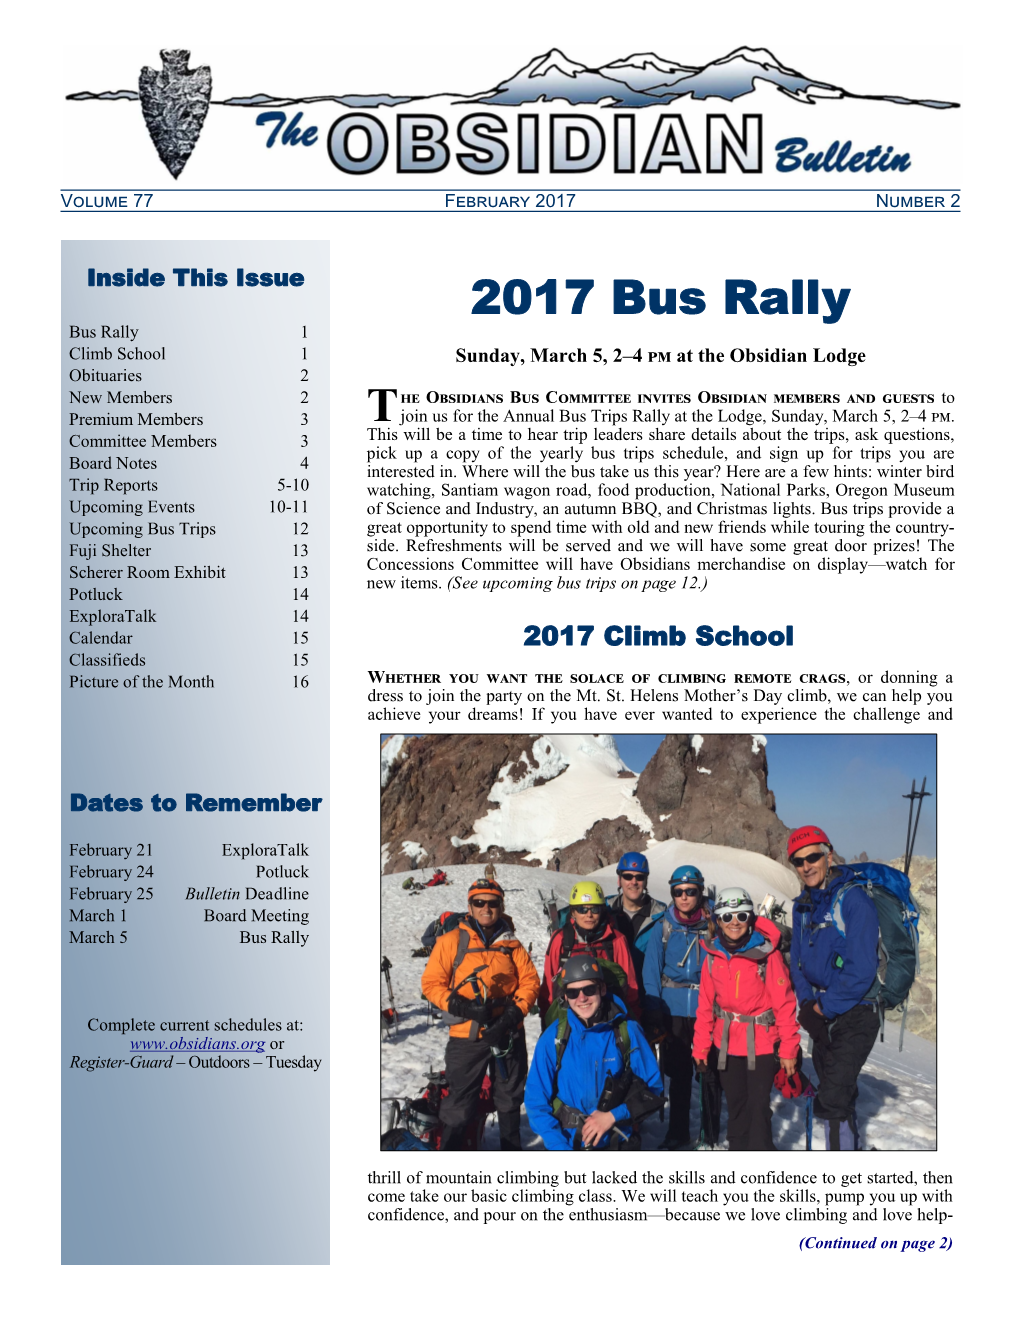 2017 Bus Rally